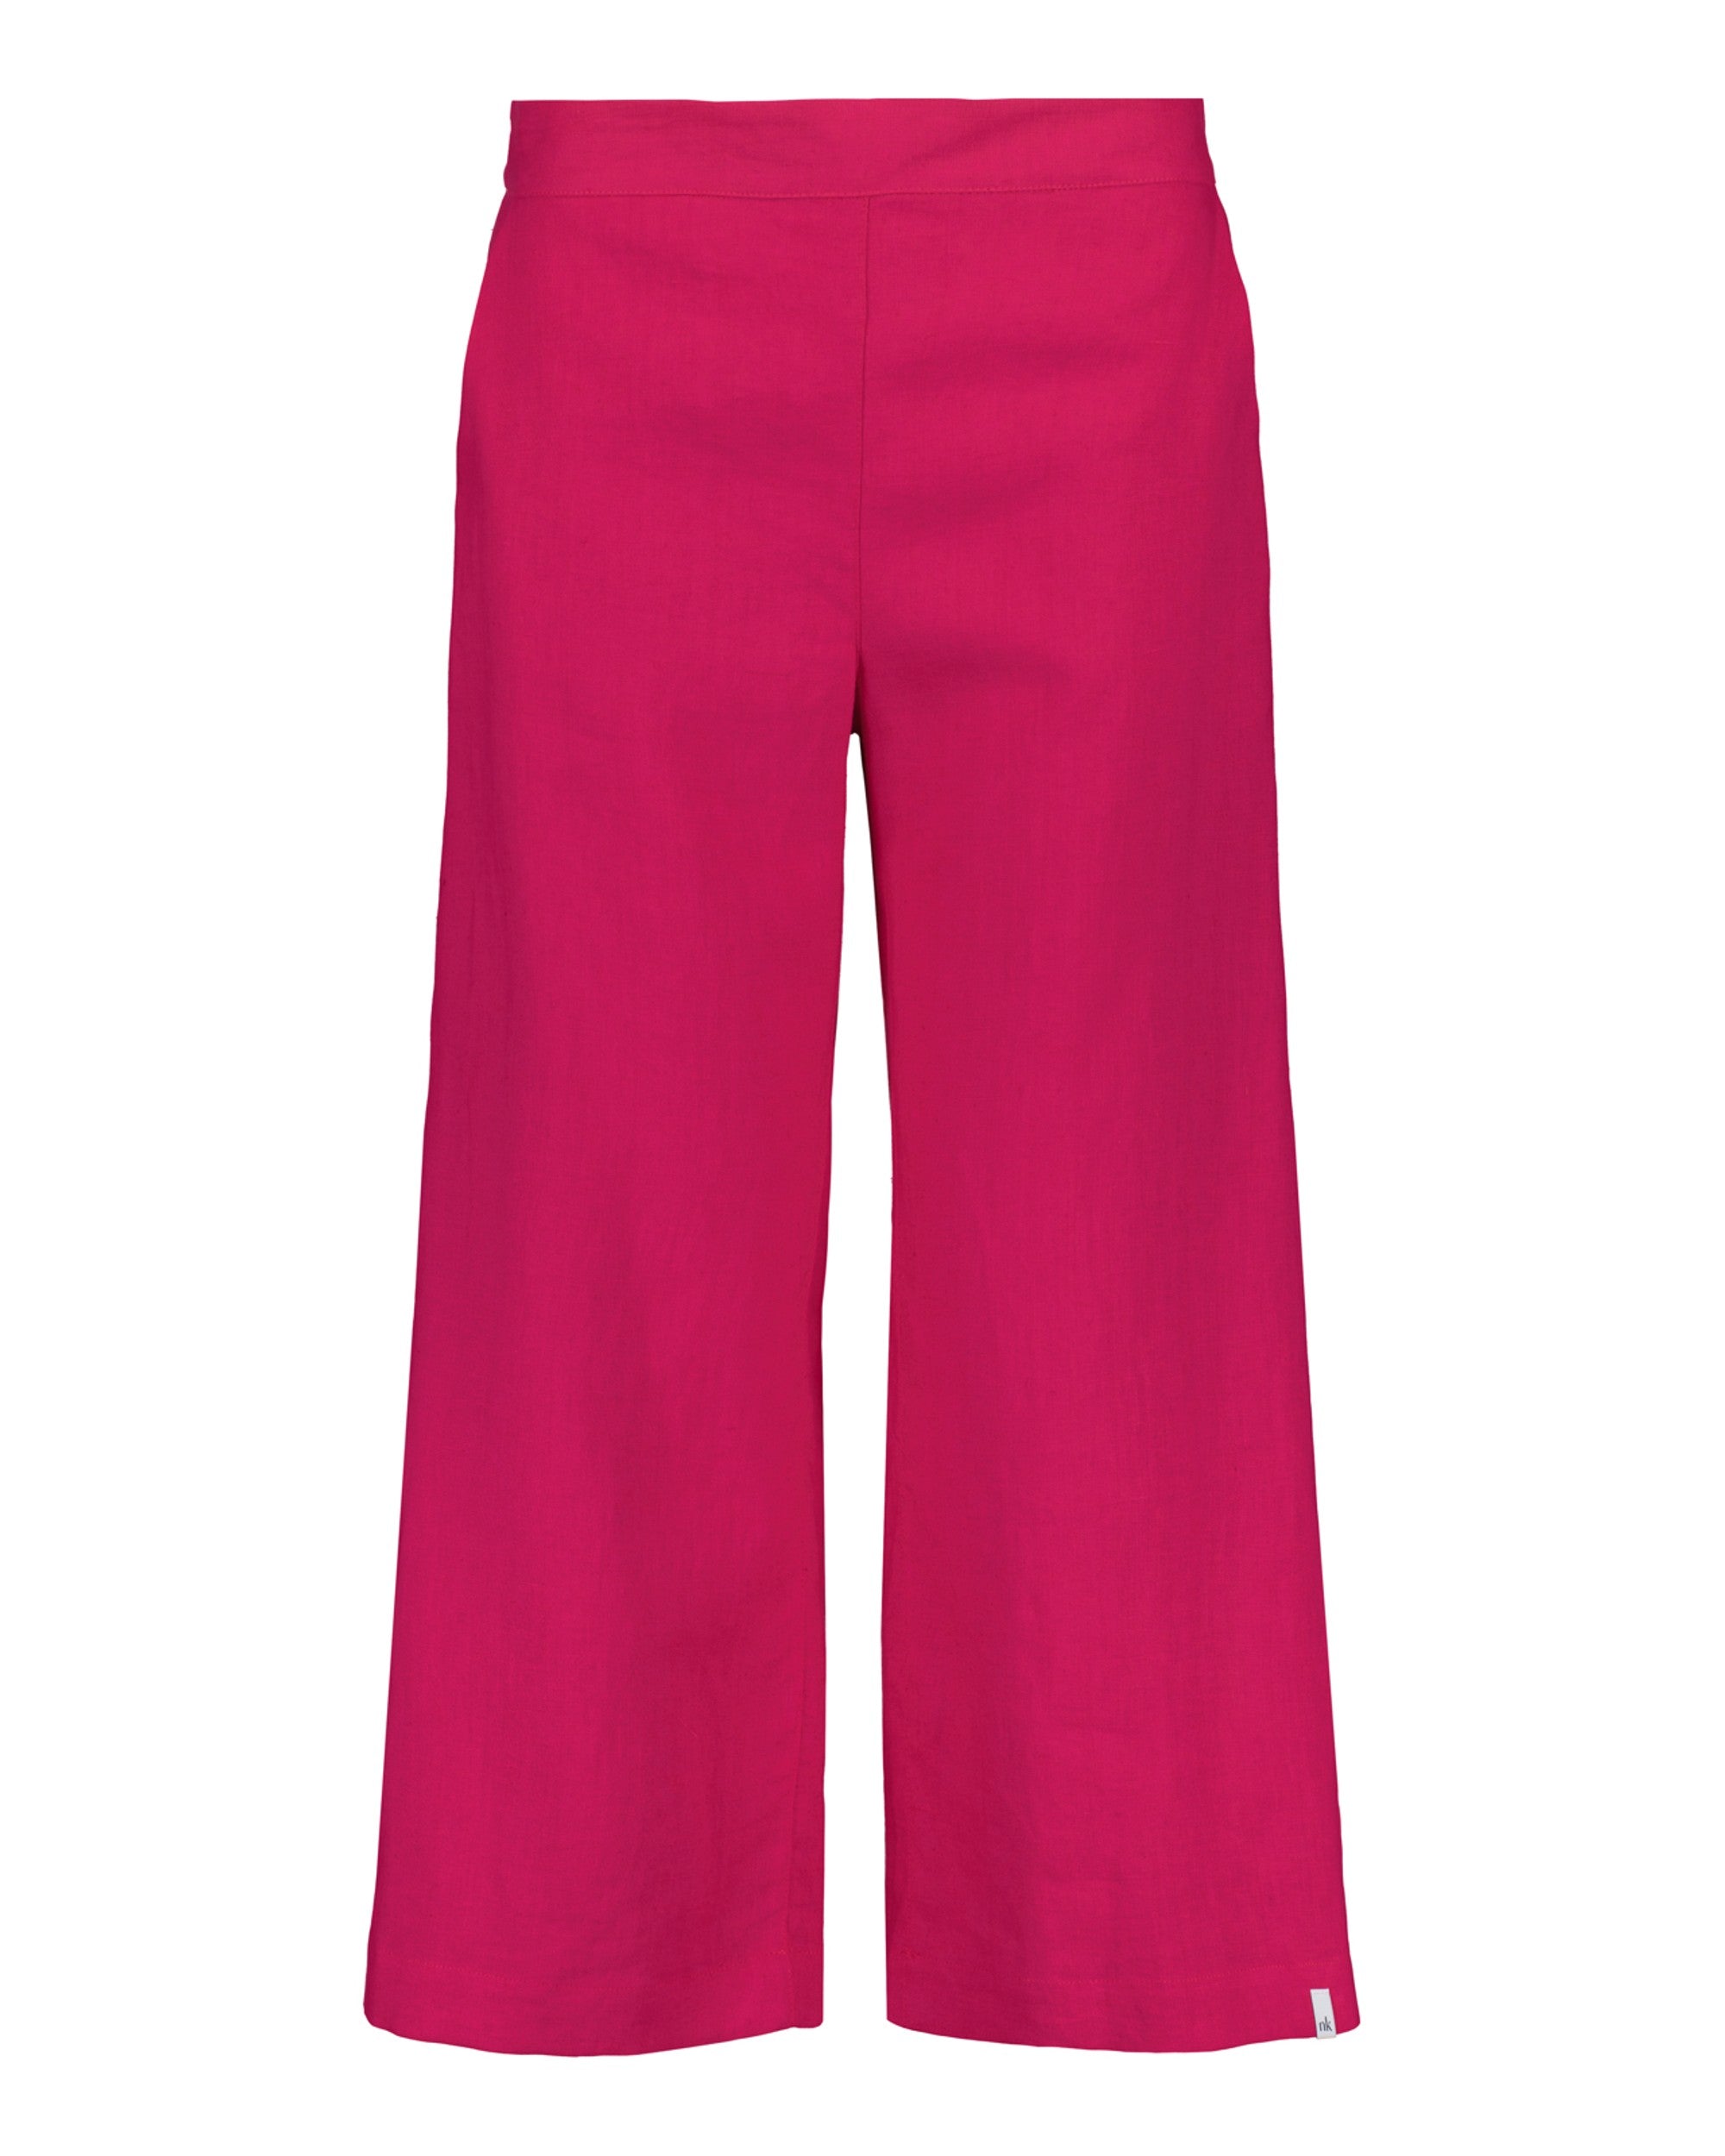 Culottes linen pants, Pink Peacock